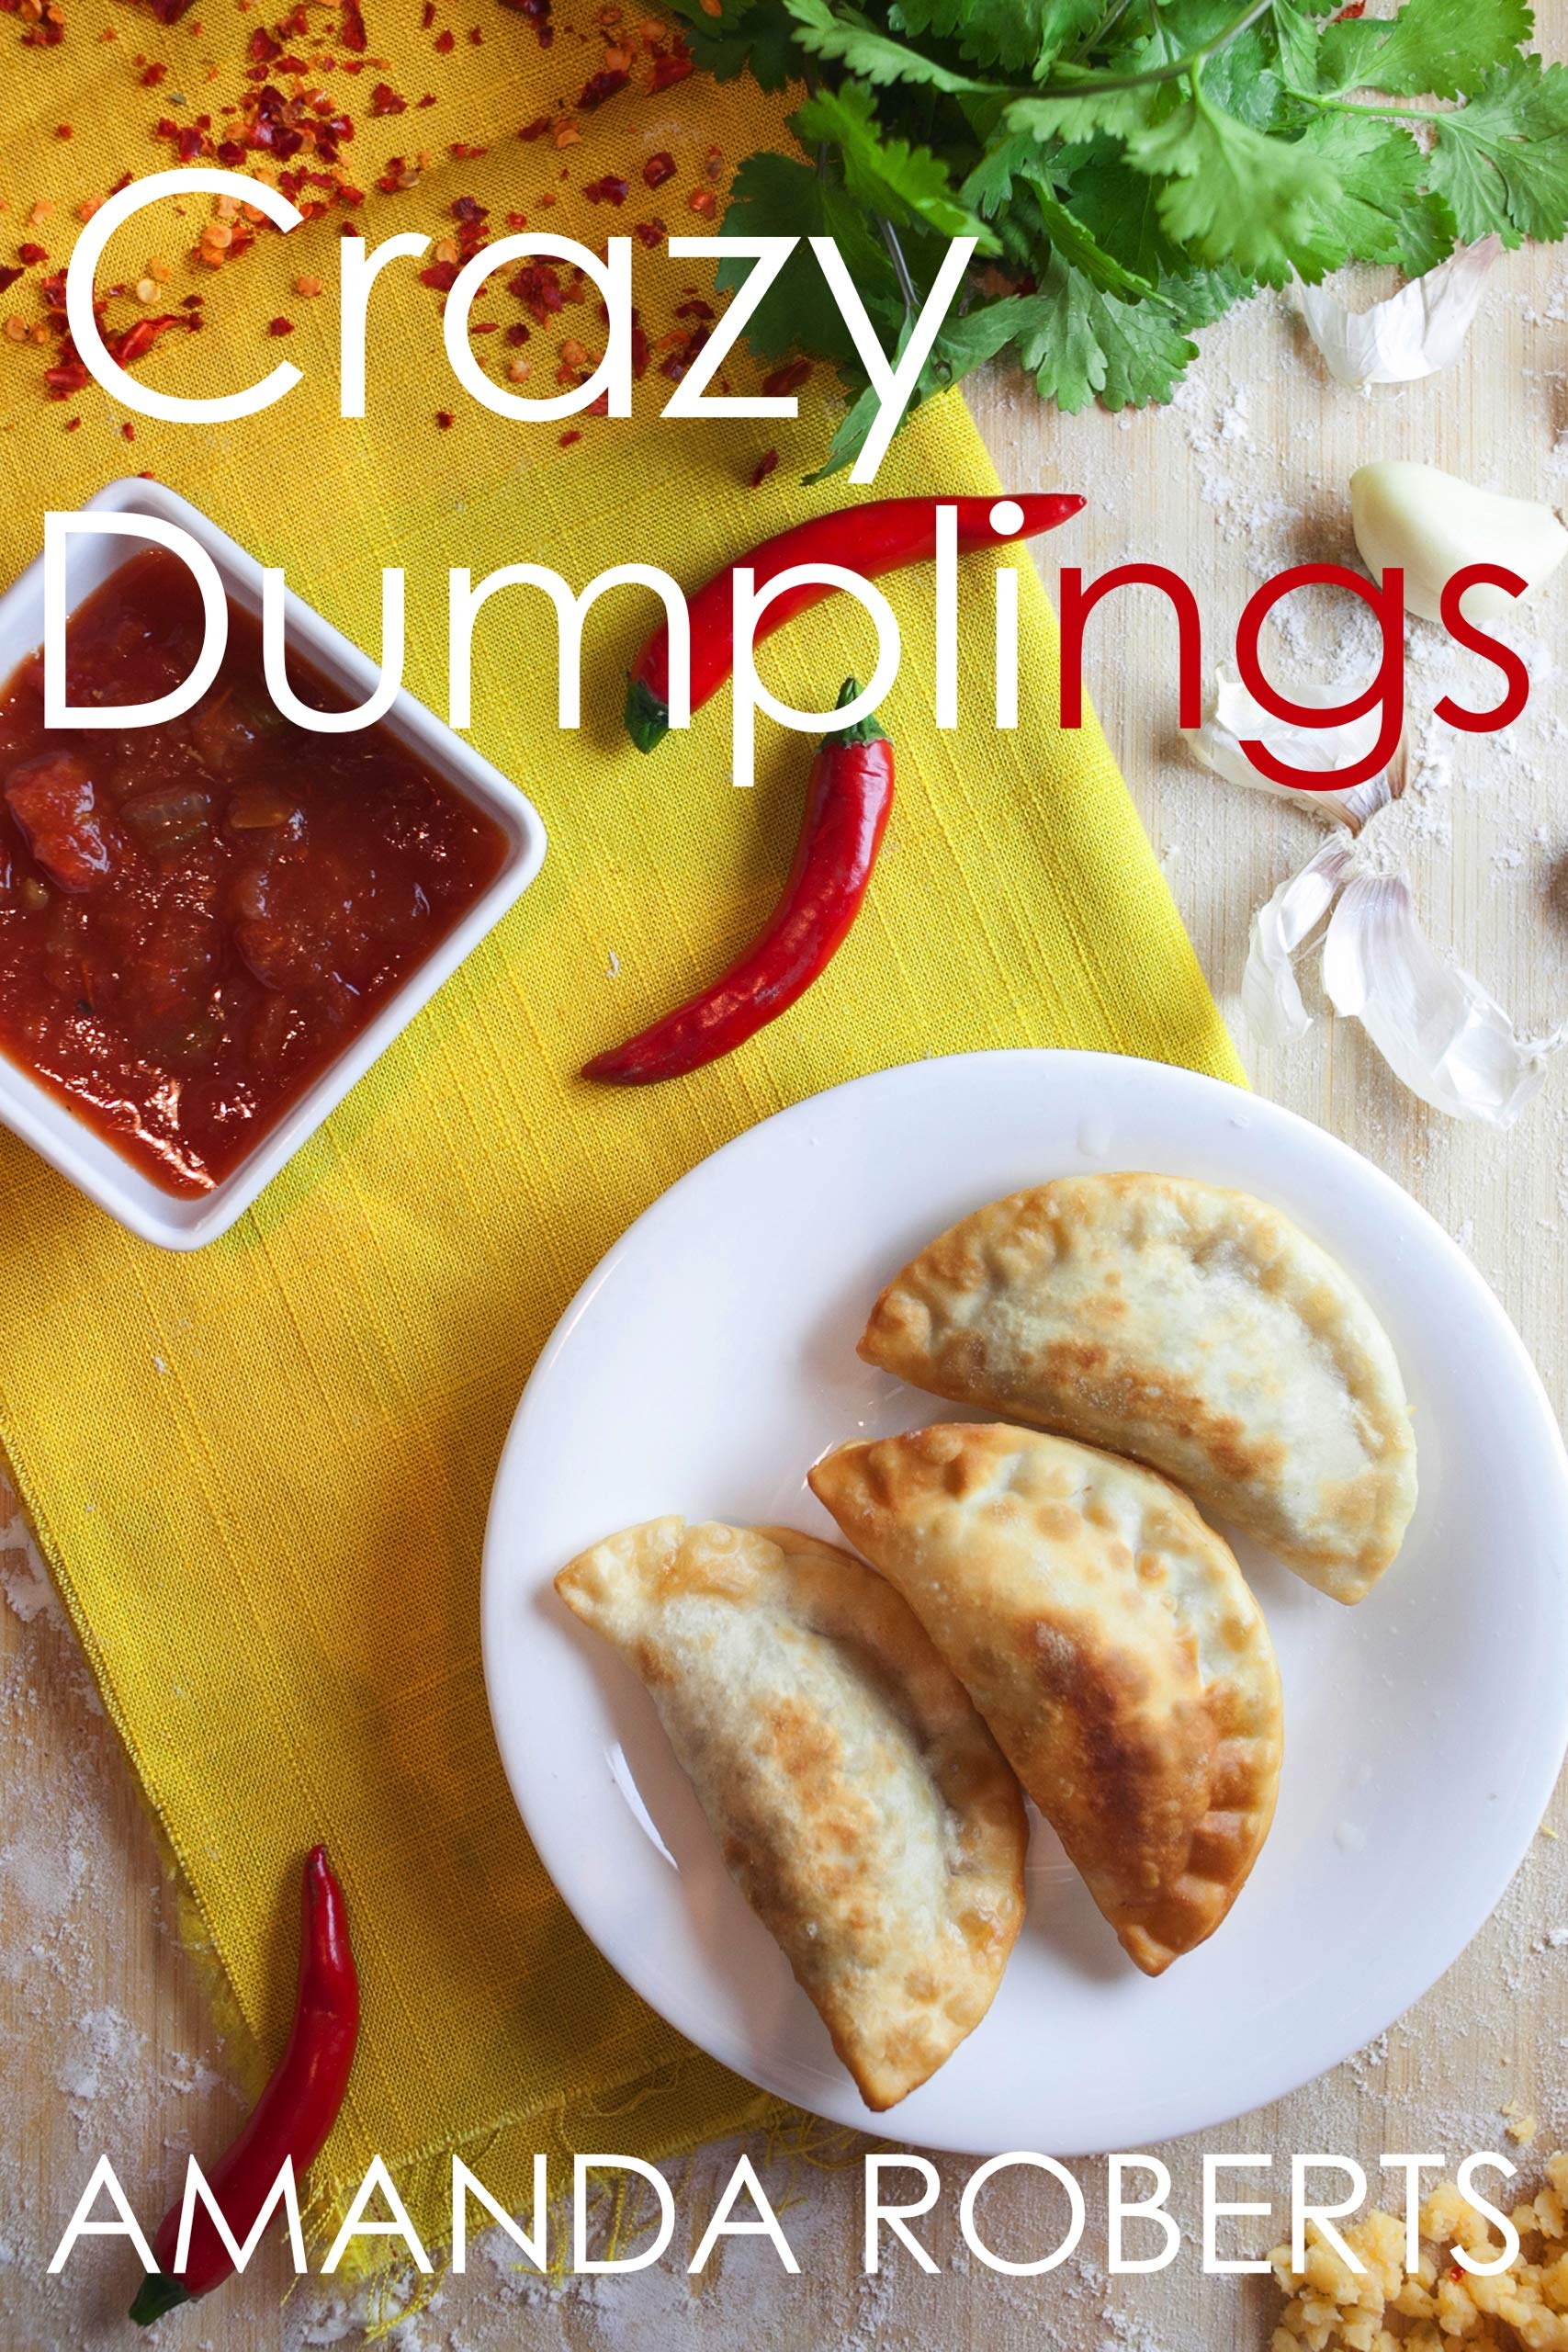 The Crazy Dumplings Cookbook: A Fun Asian Fusion Cookbook